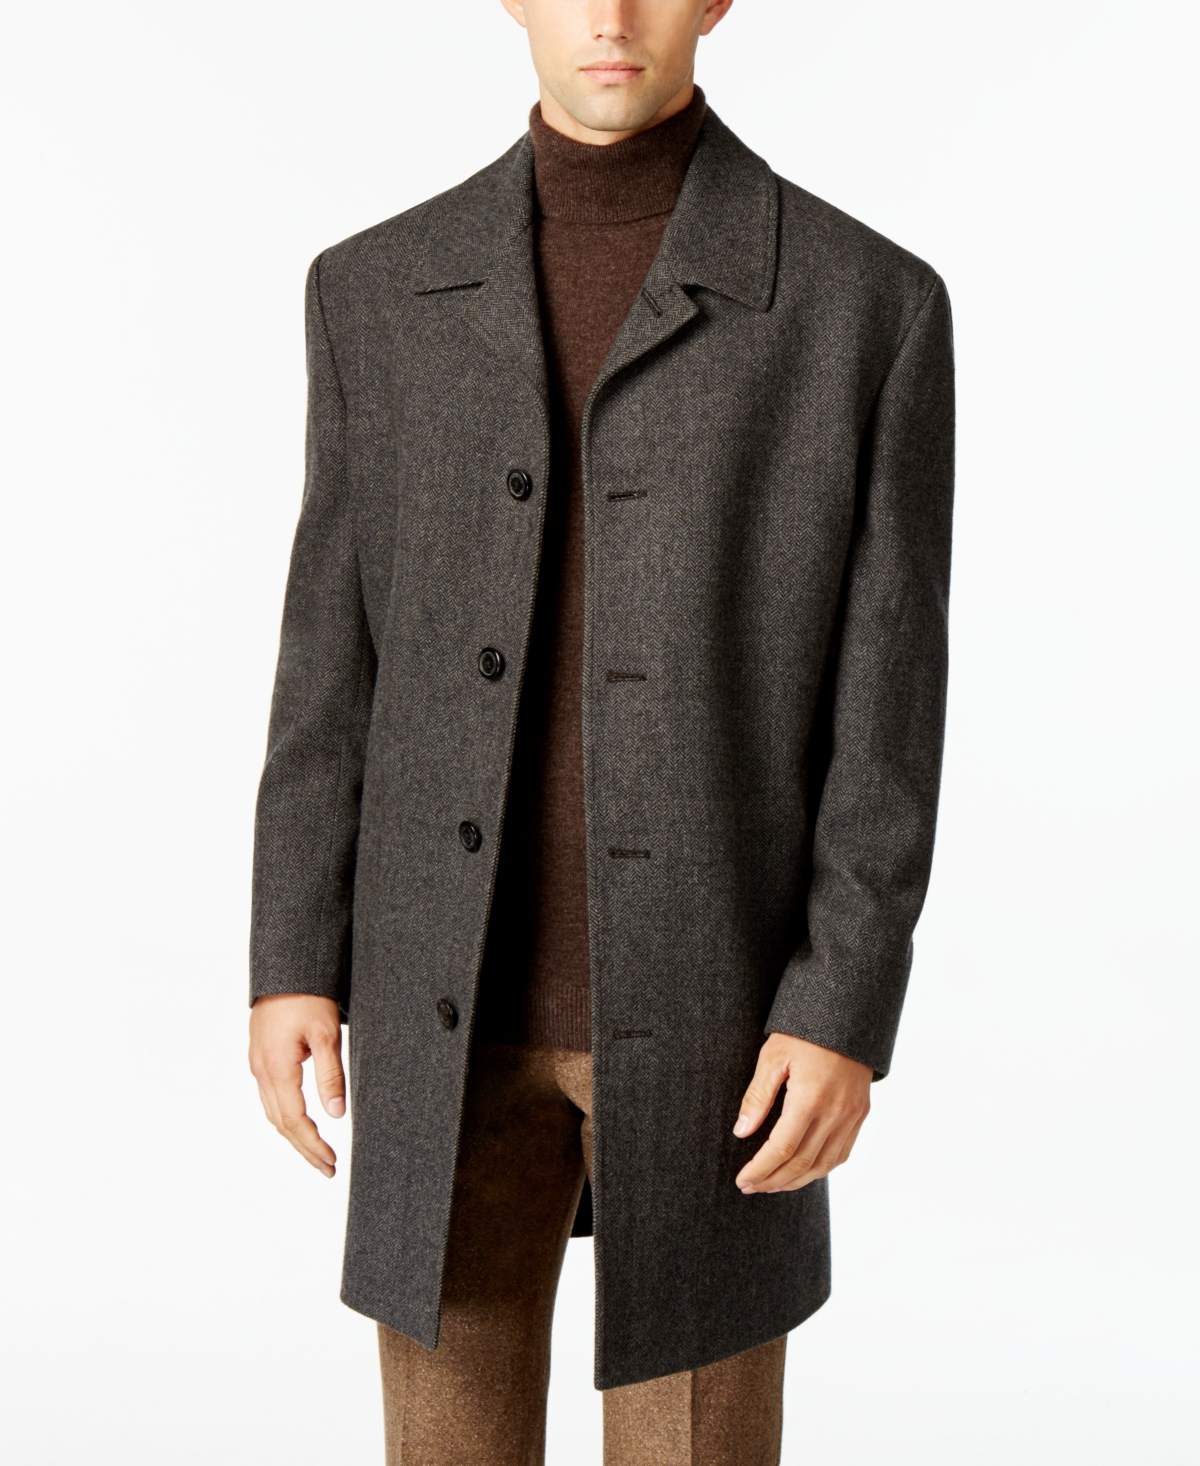 London Fog Coventry Wool Blend Overcoat Smart Closet